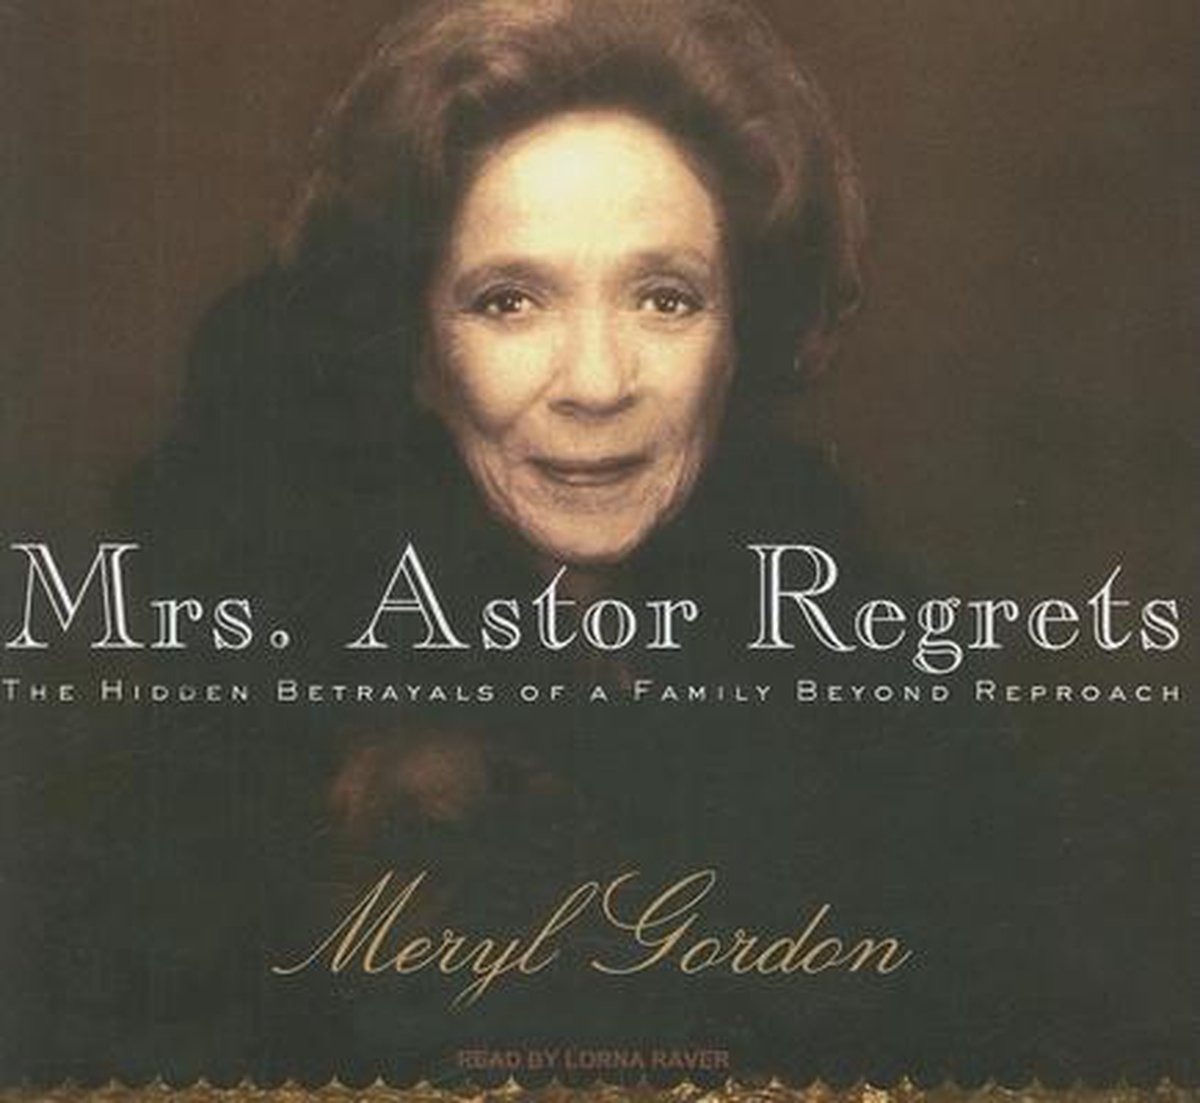 Mrs. Astor Regrets by Meryl Gordon